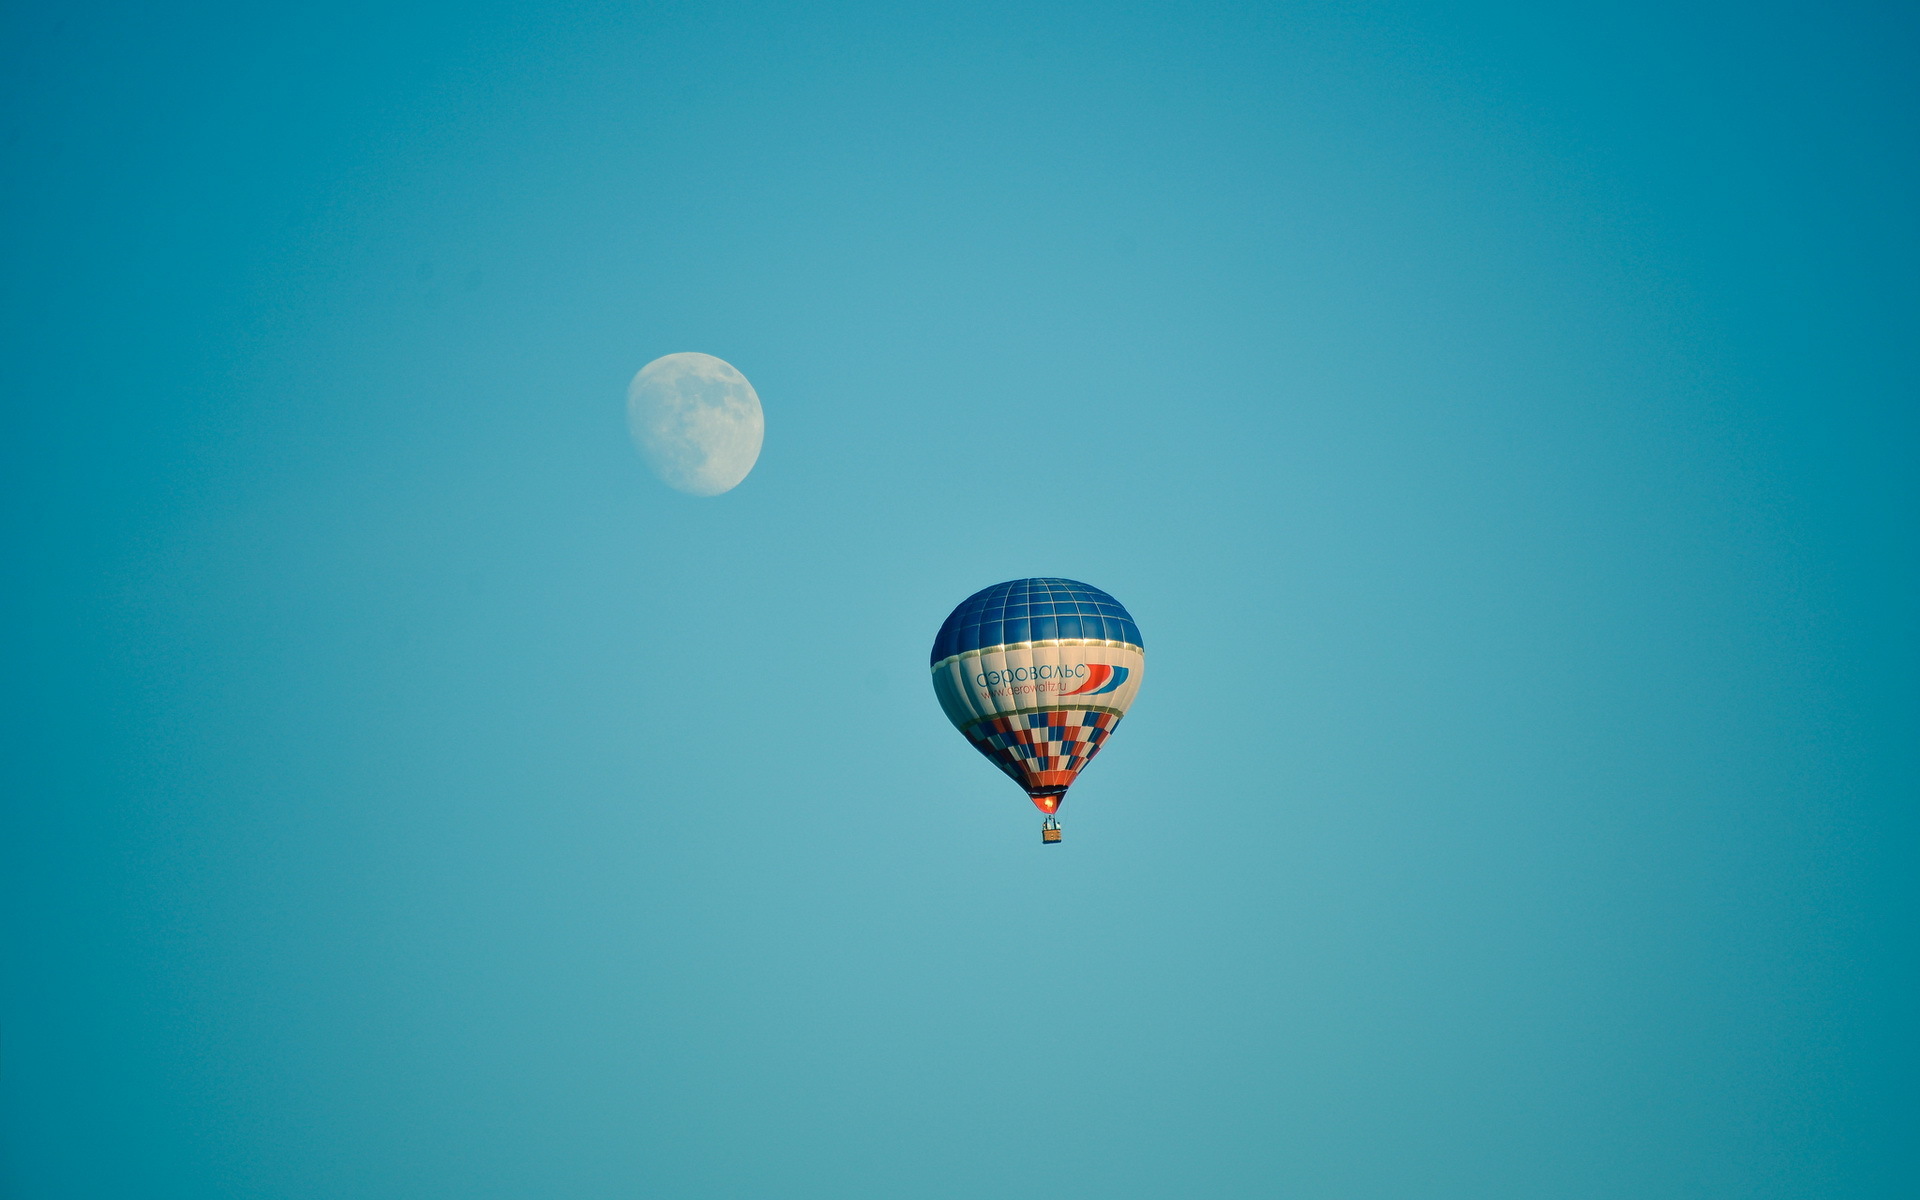 hot hd wallpaper download,hot air ballooning,hot air balloon,sky,blue,daytime